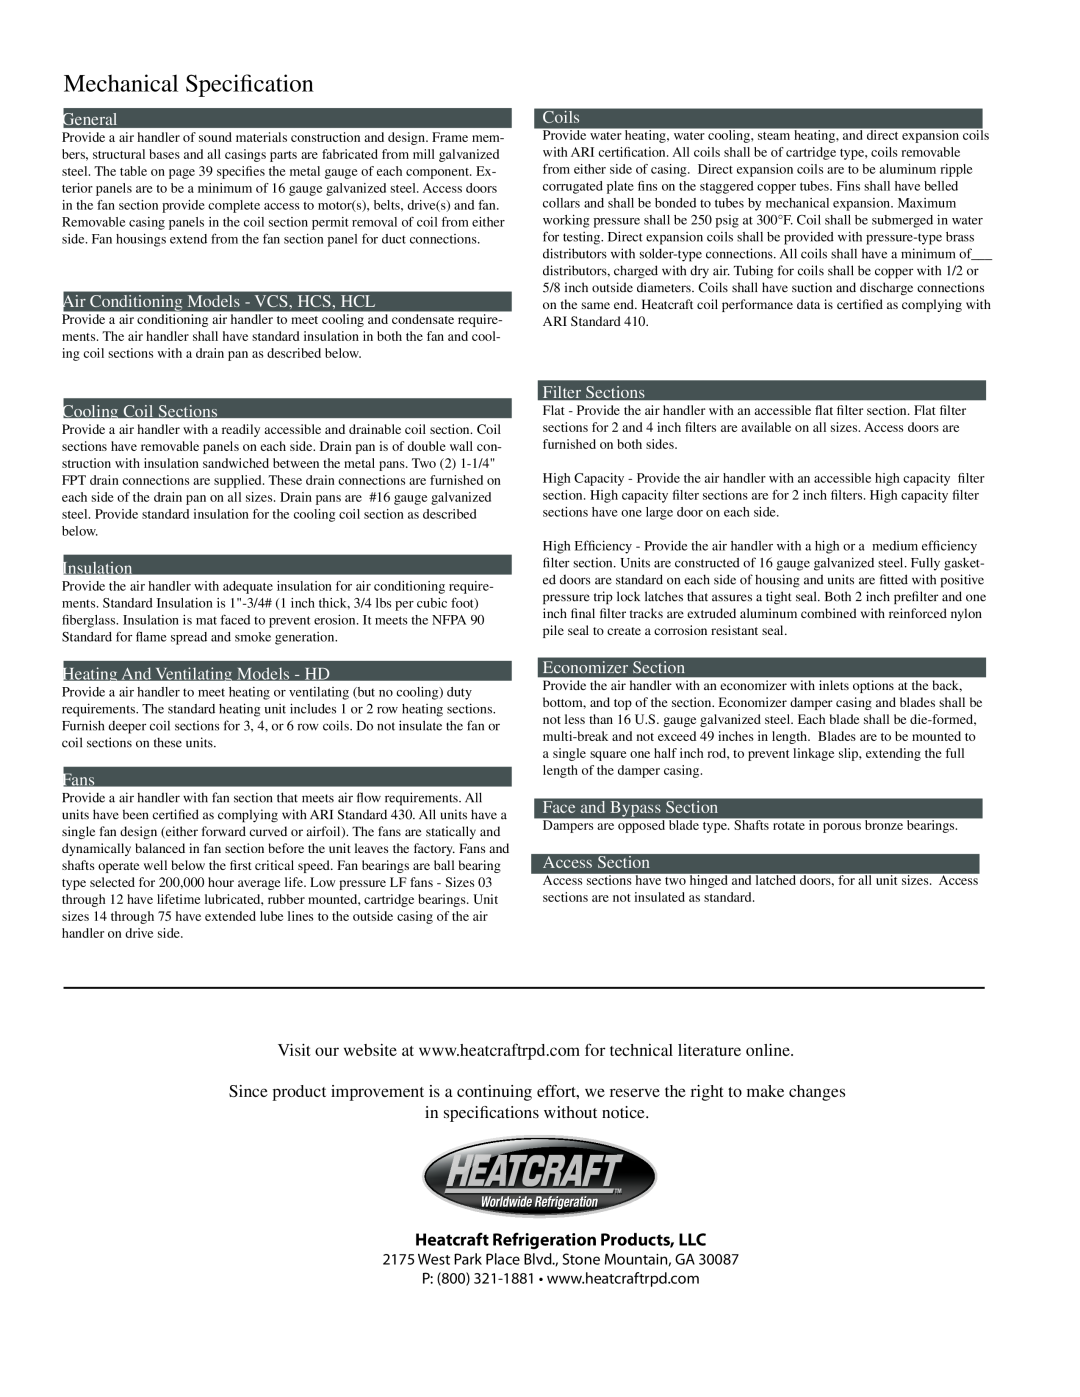 Heatcraft Refrigeration Products HCS manual Mechanical Specification, Heatcraft Refrigeration Products, LLC 